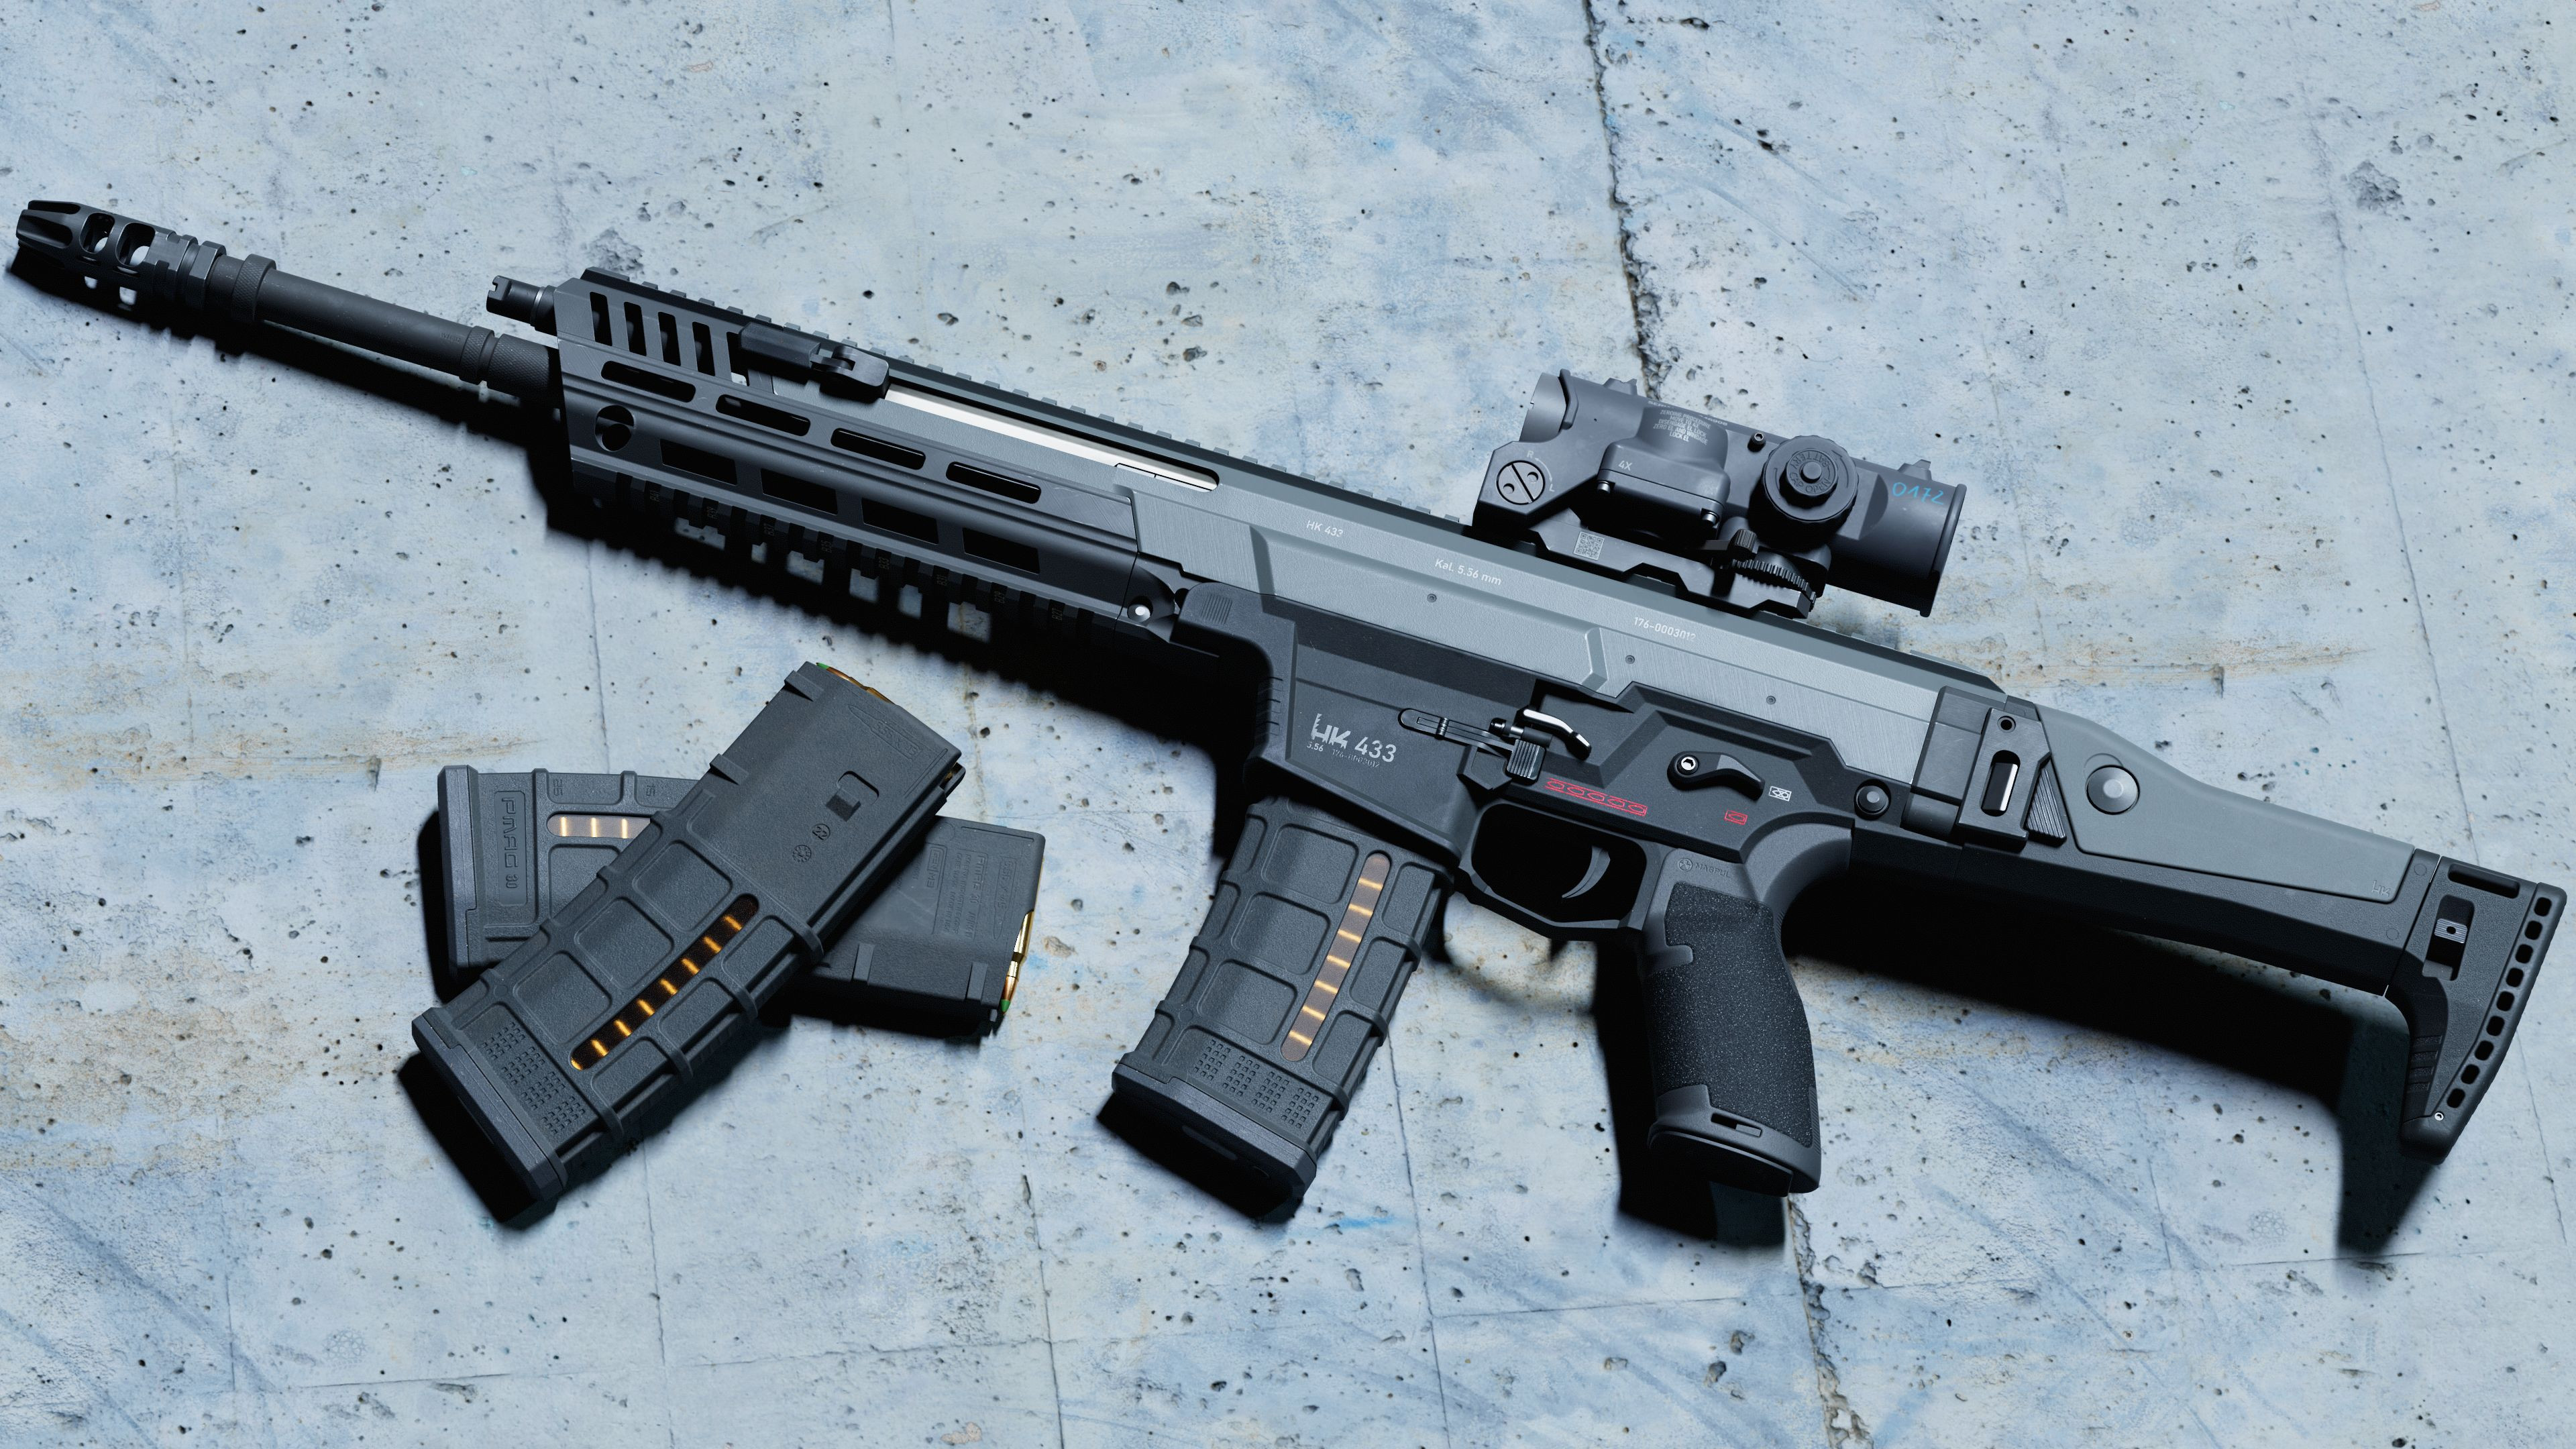 General 3840x2160 rifles military ArtStation gun simple background Futuristic Weapons Heckler & Koch assault rifle mags